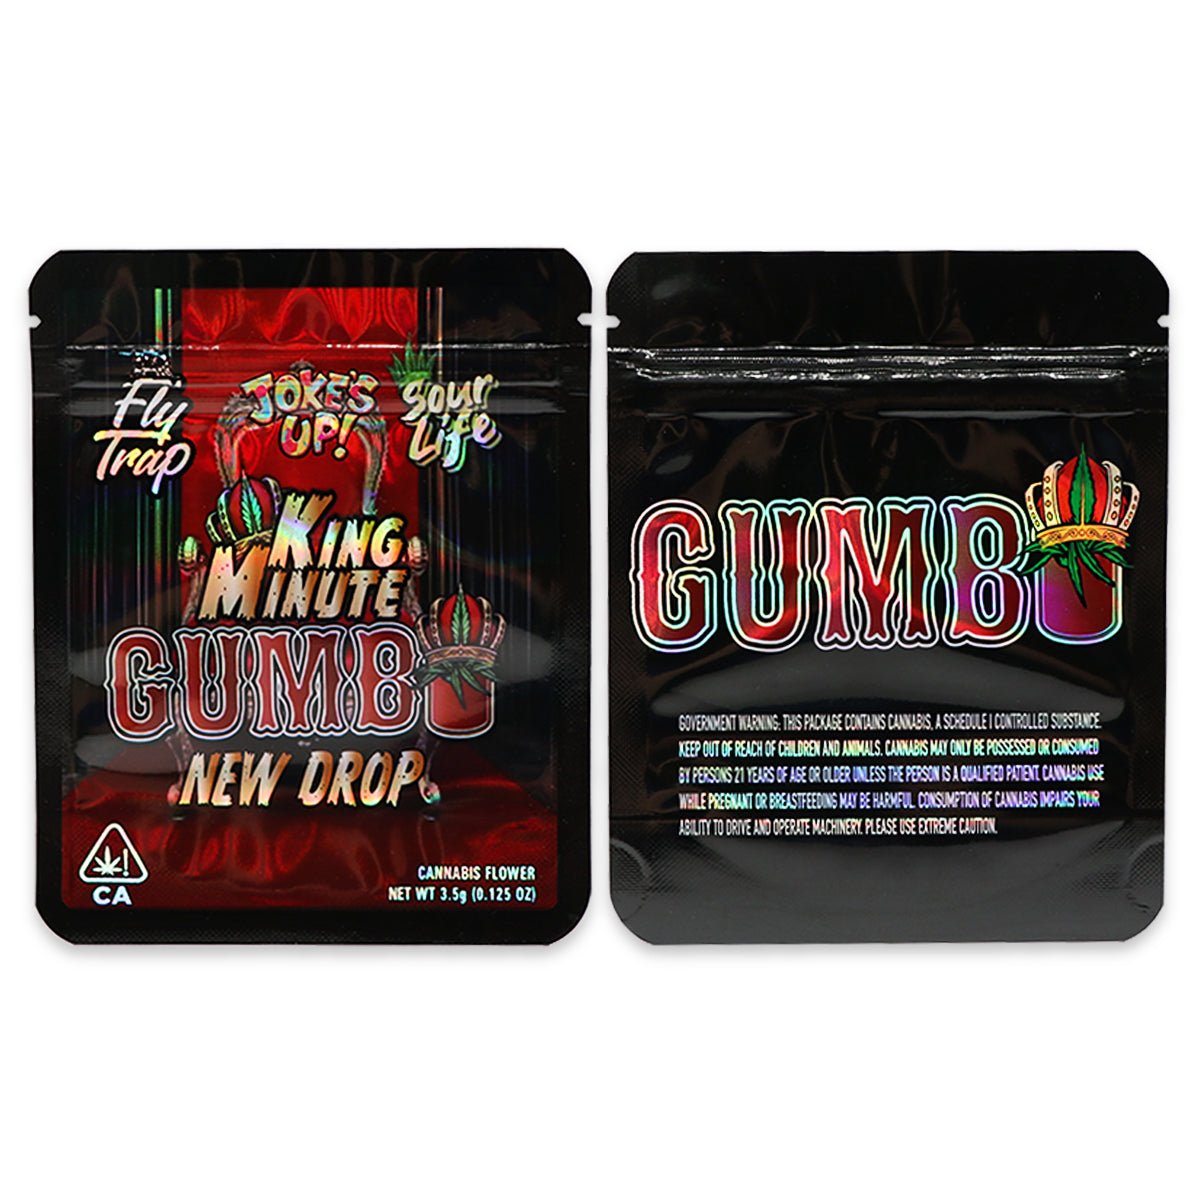 King Minute Gumbo Weed Mylar Bags 3.5 Grams